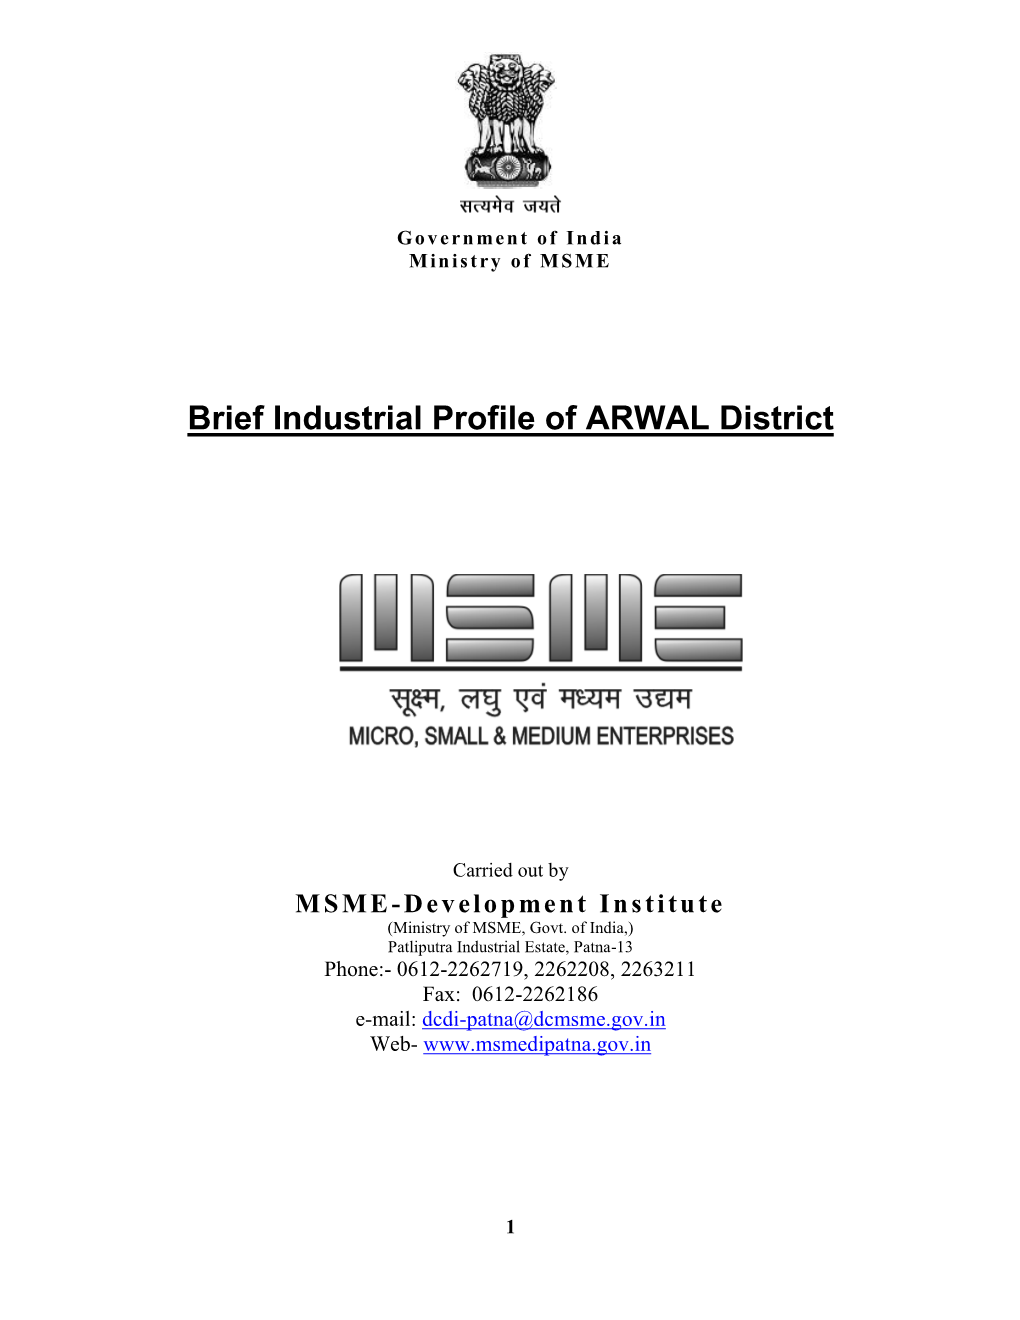 Brief Industrial Profile of ARWAL District